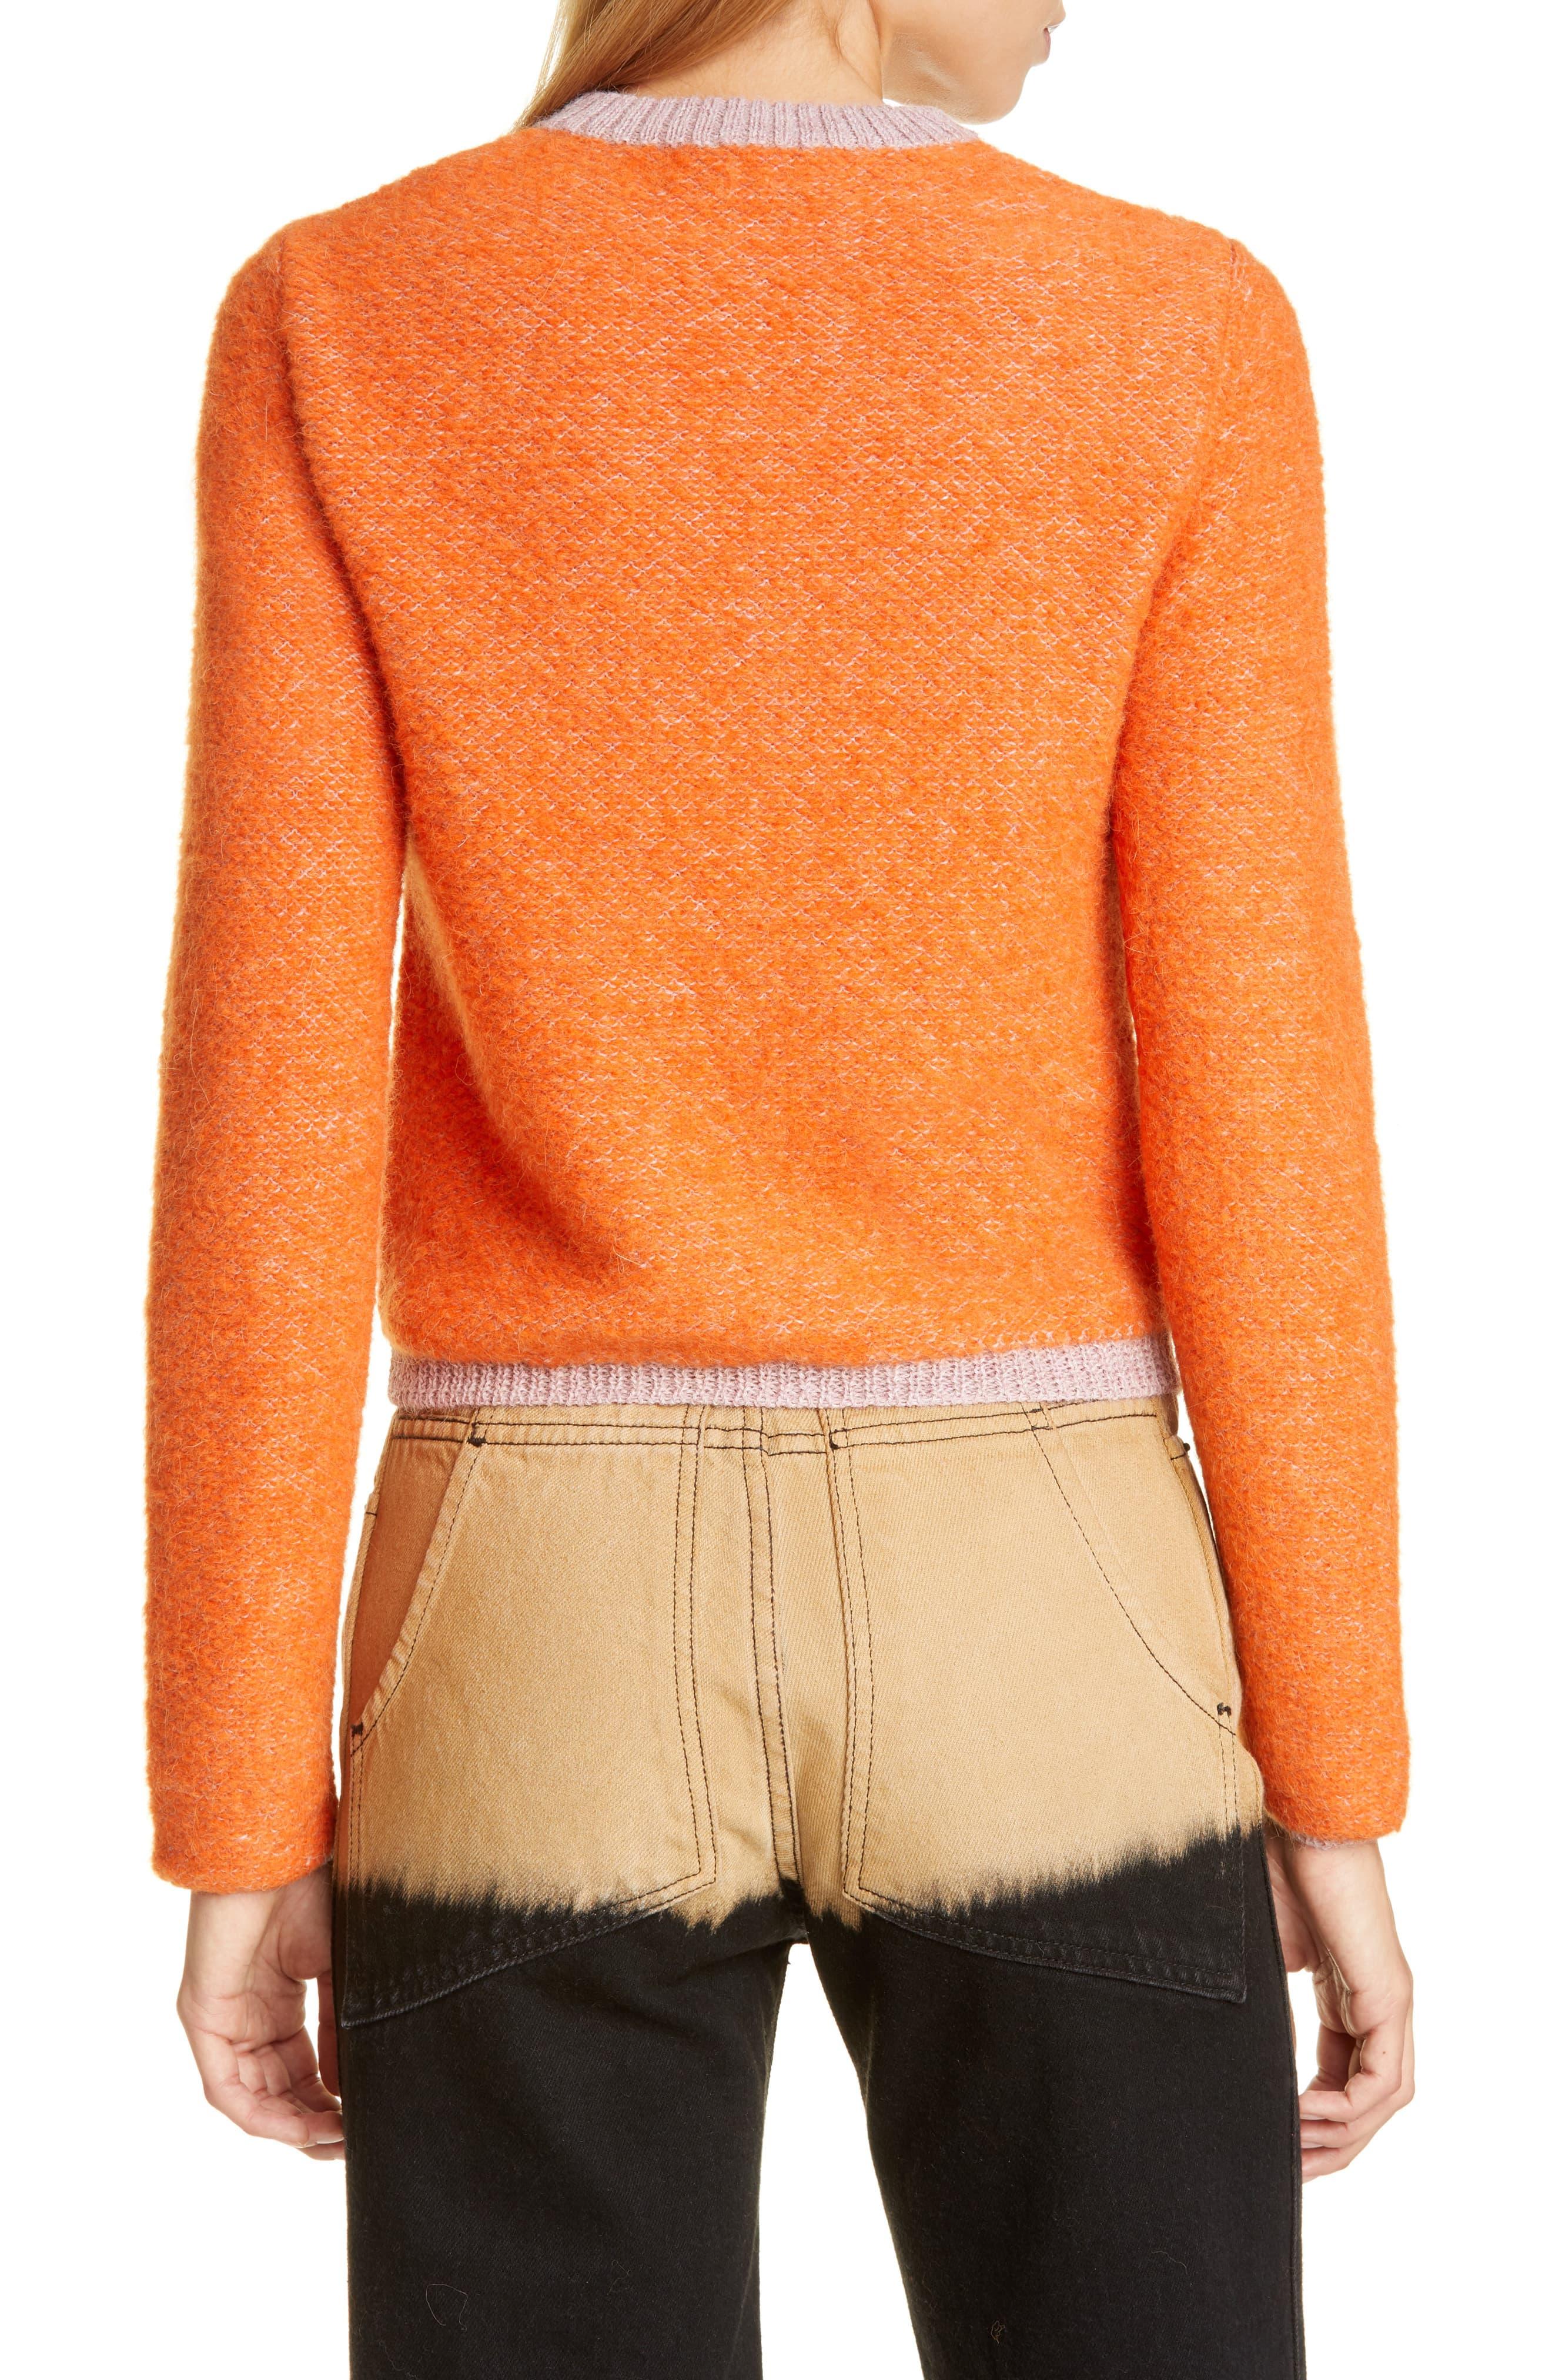 Eckhaus Latta Clavicle Cutout Crop Sweater in Orange - Lyst